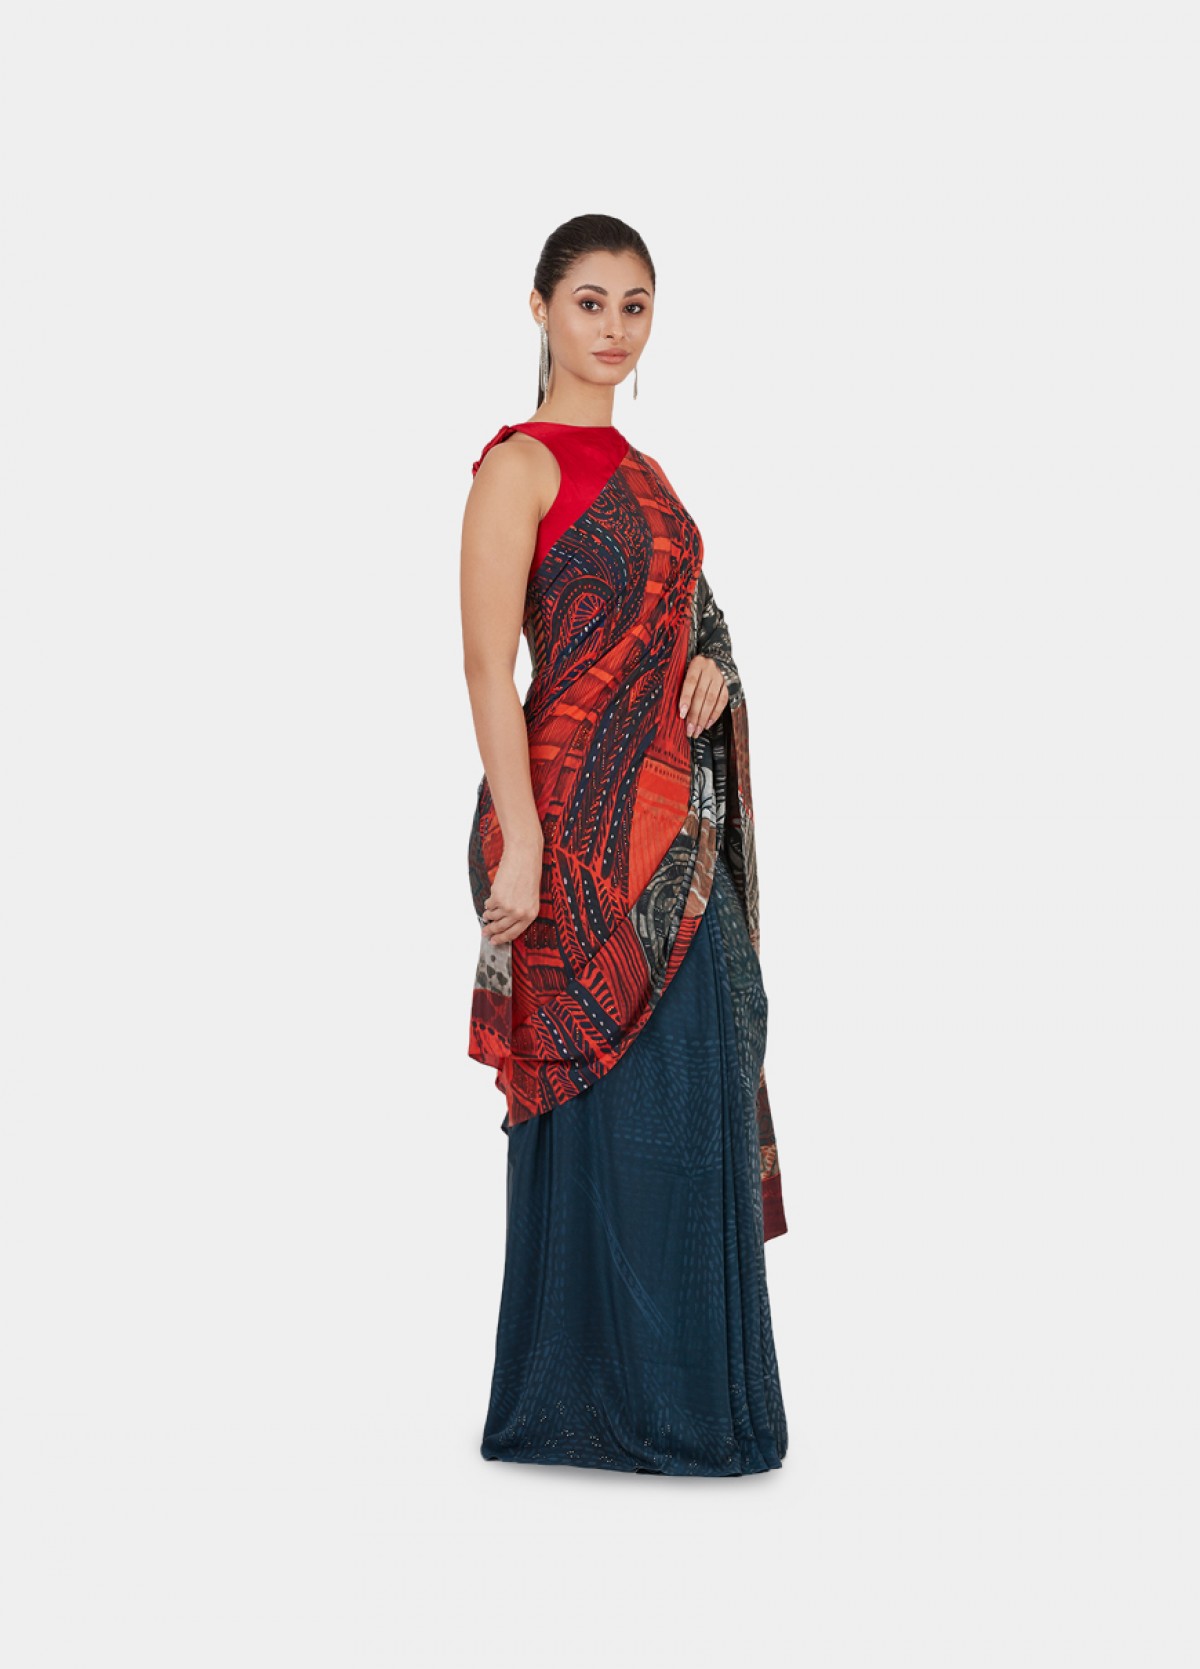 The Gond Sari